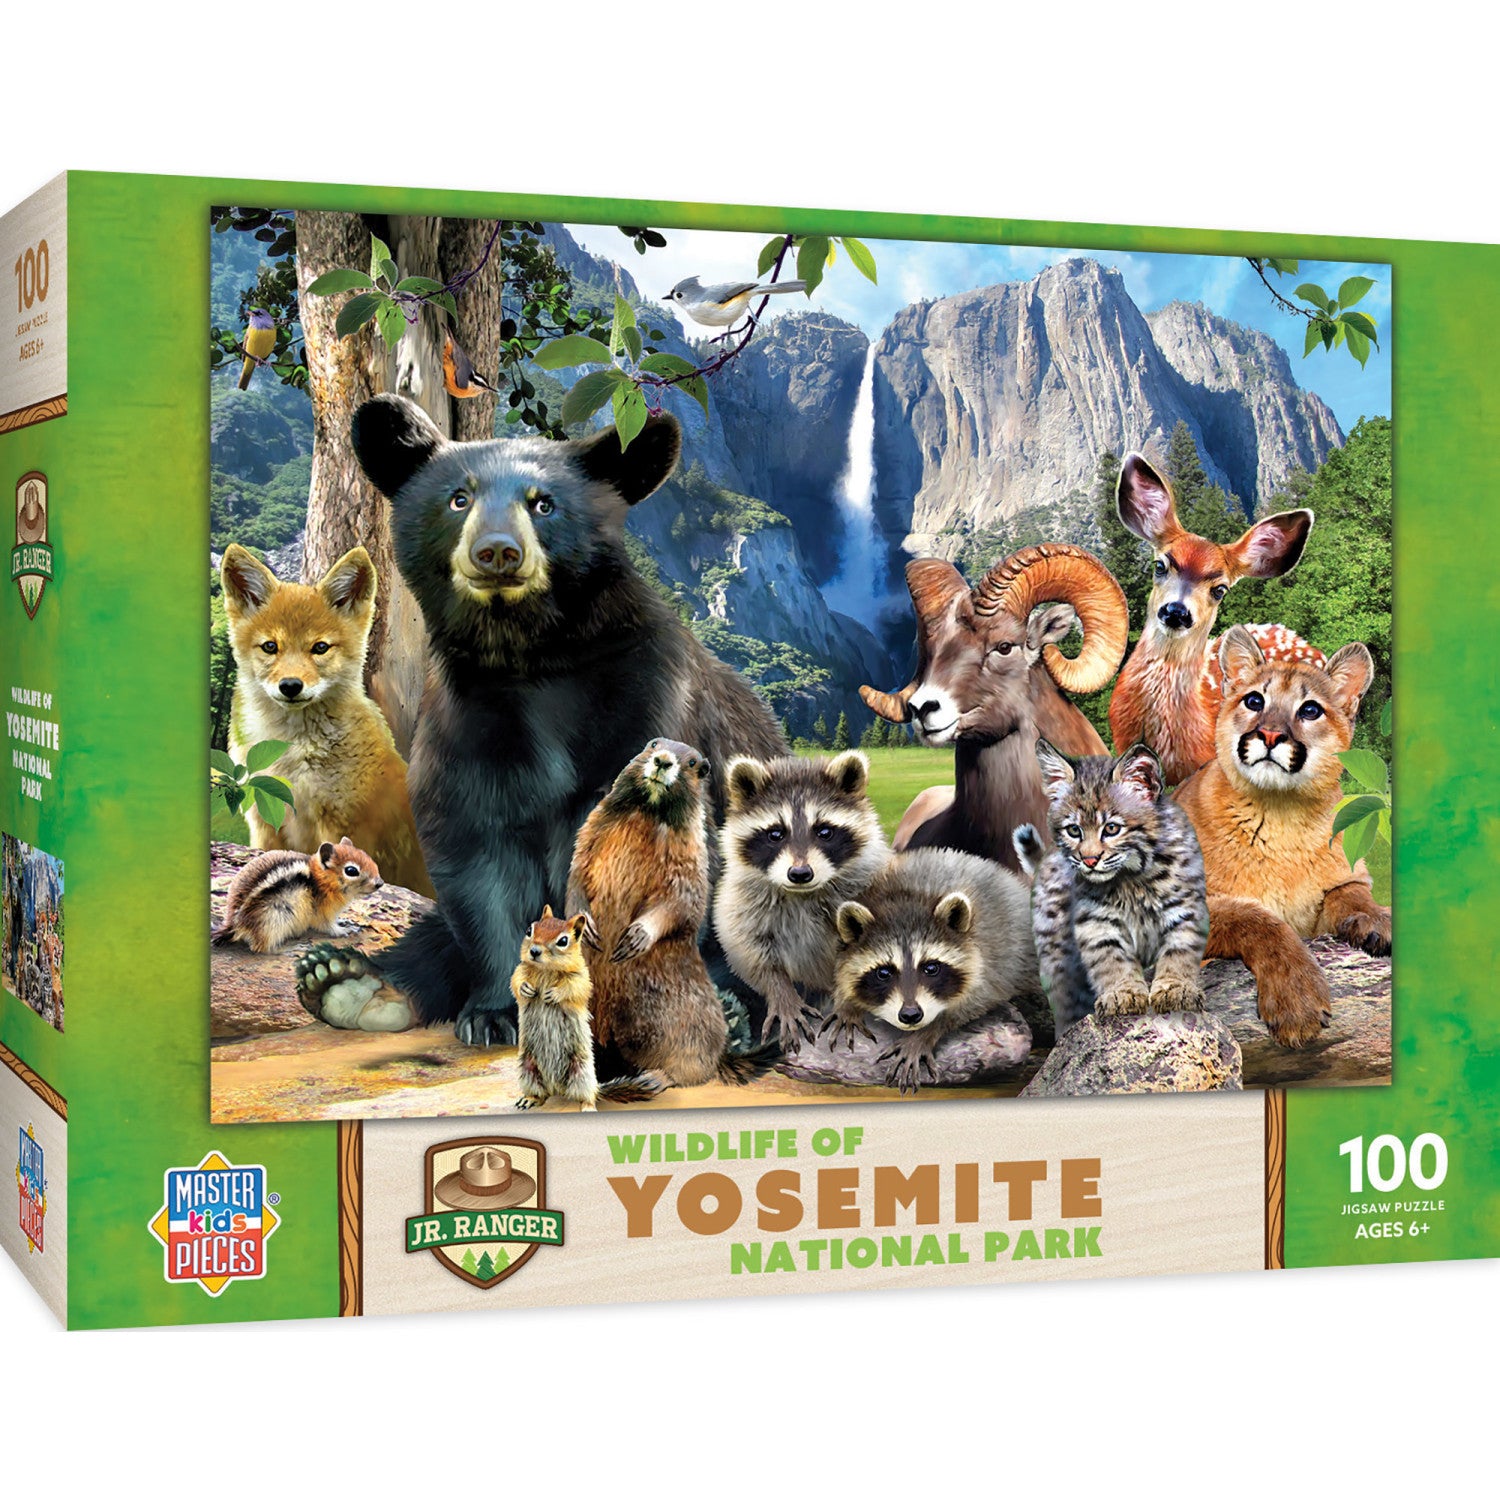 Wildlife of Yosemite National Park - 100 Piece Puzzle